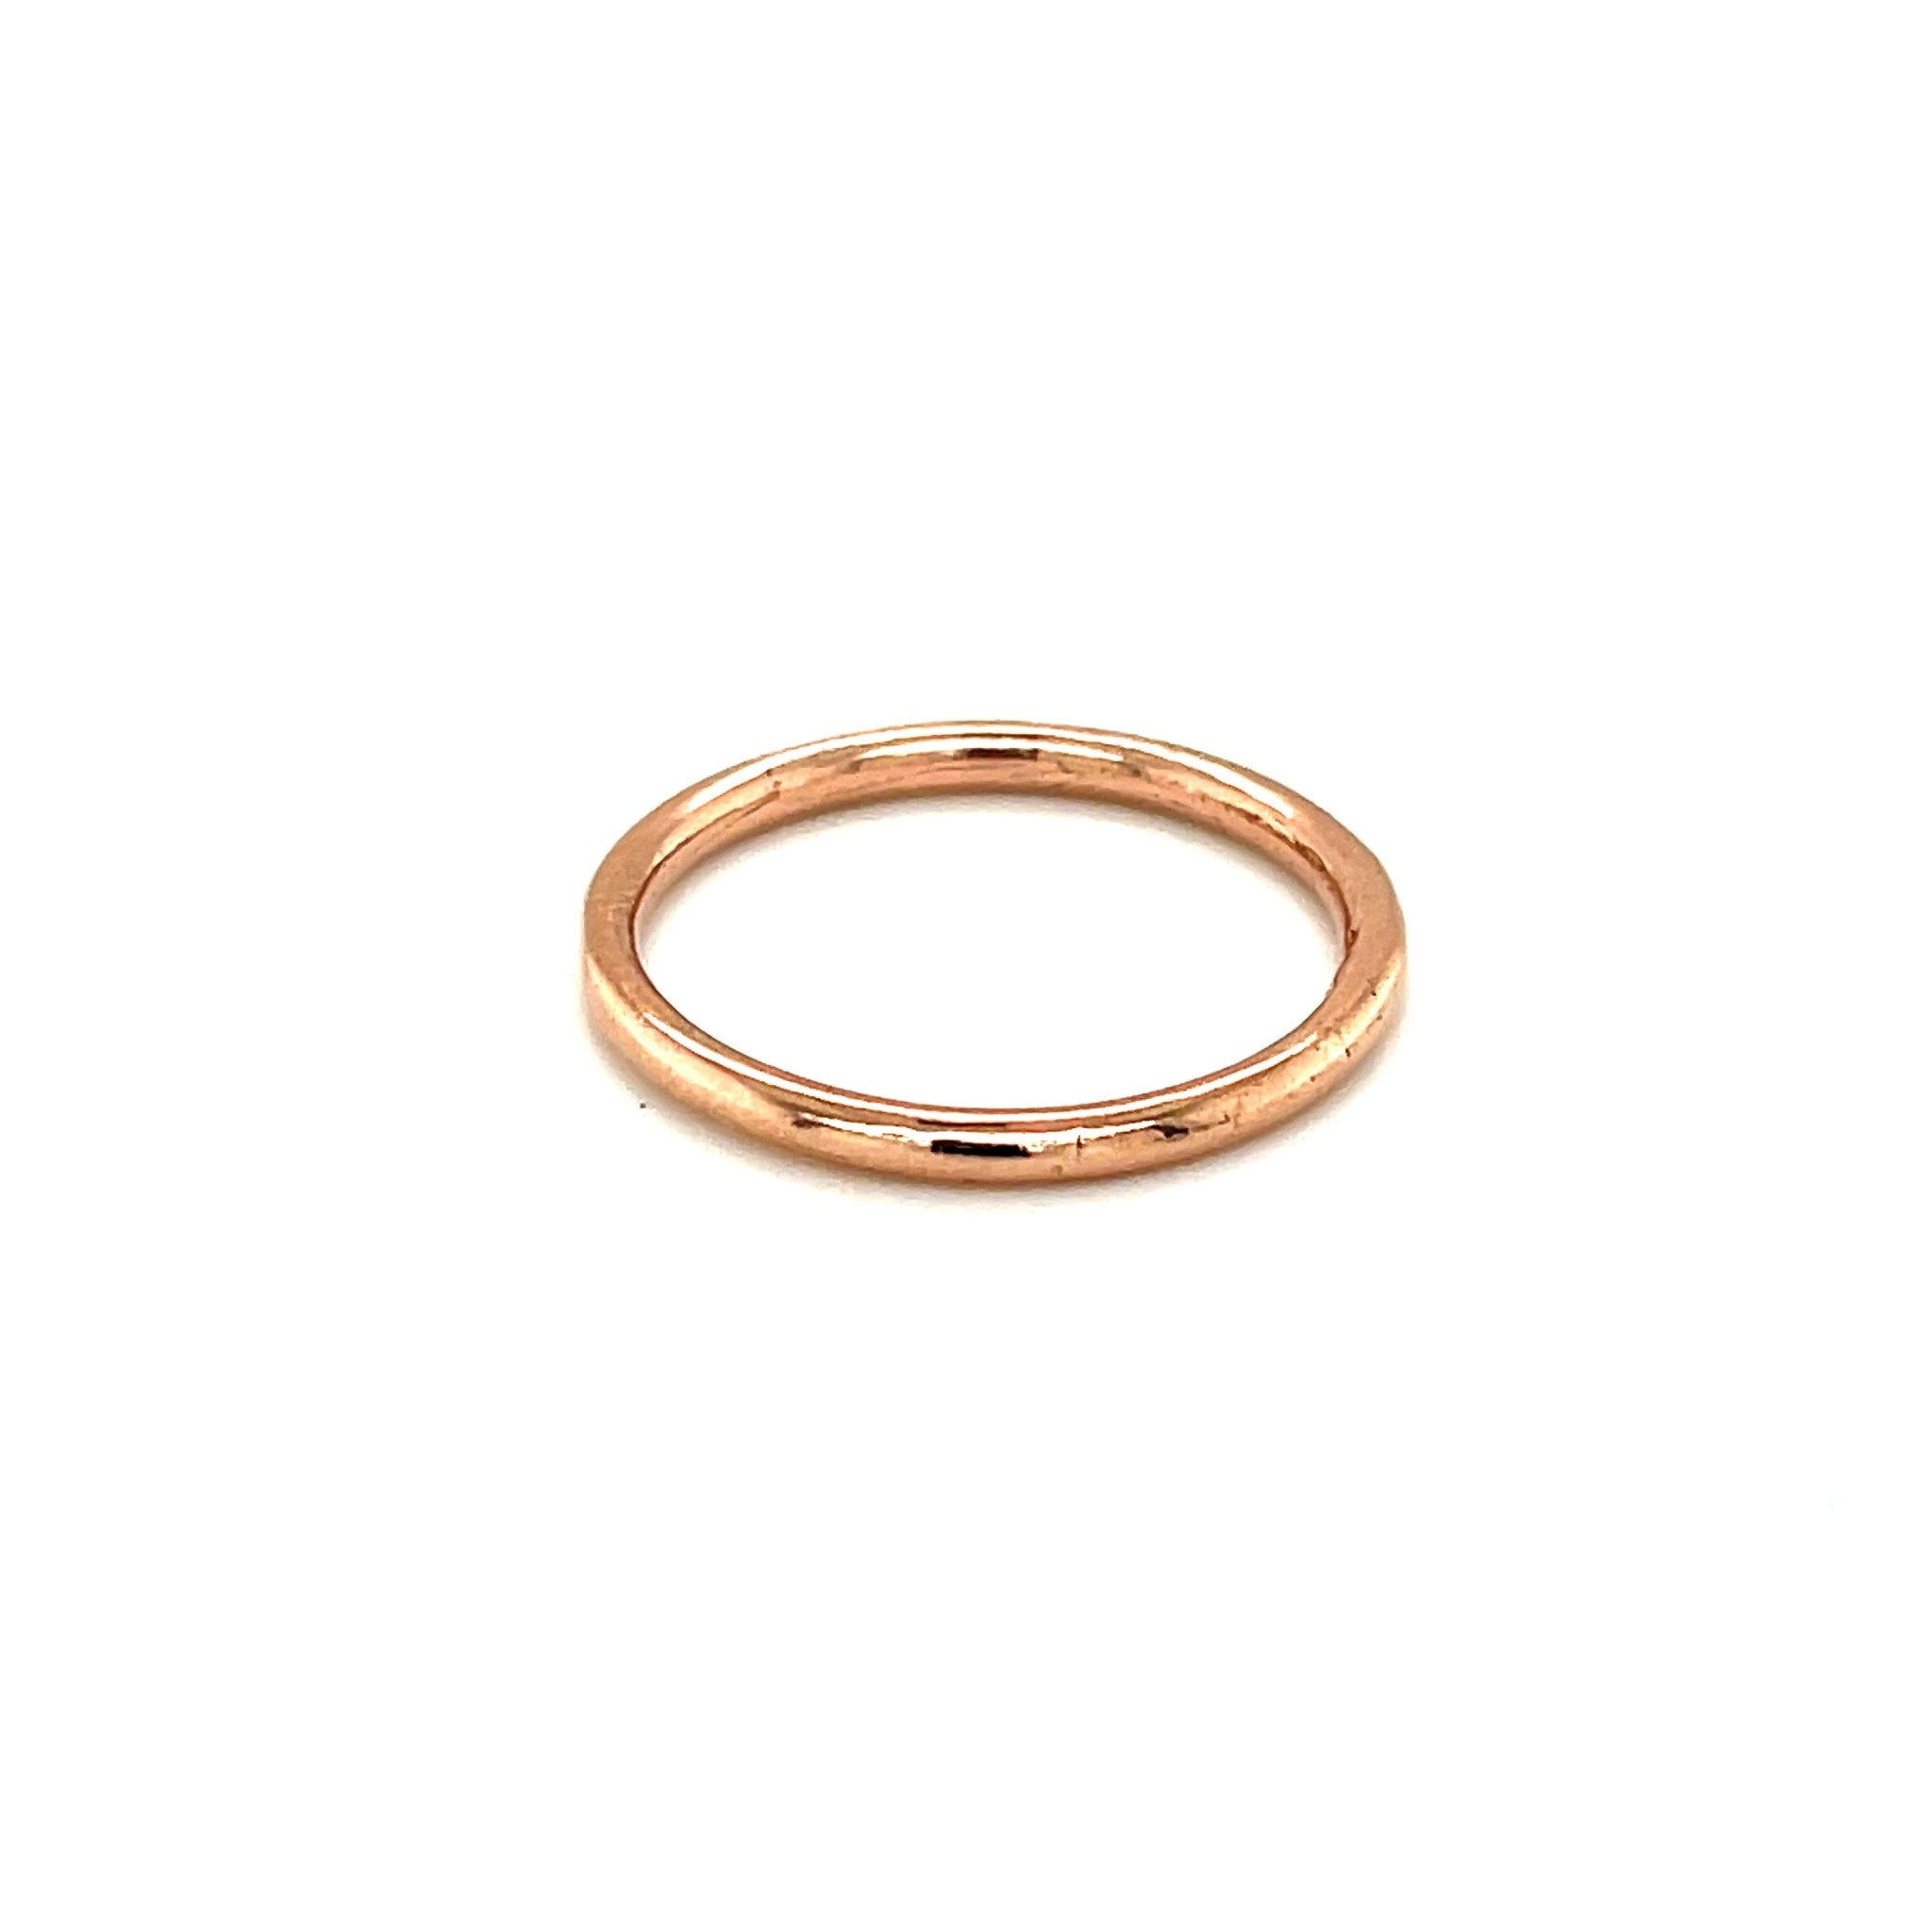 Mid-Weight Men's Wedding Ring in 14K Rose Gold (4mm)